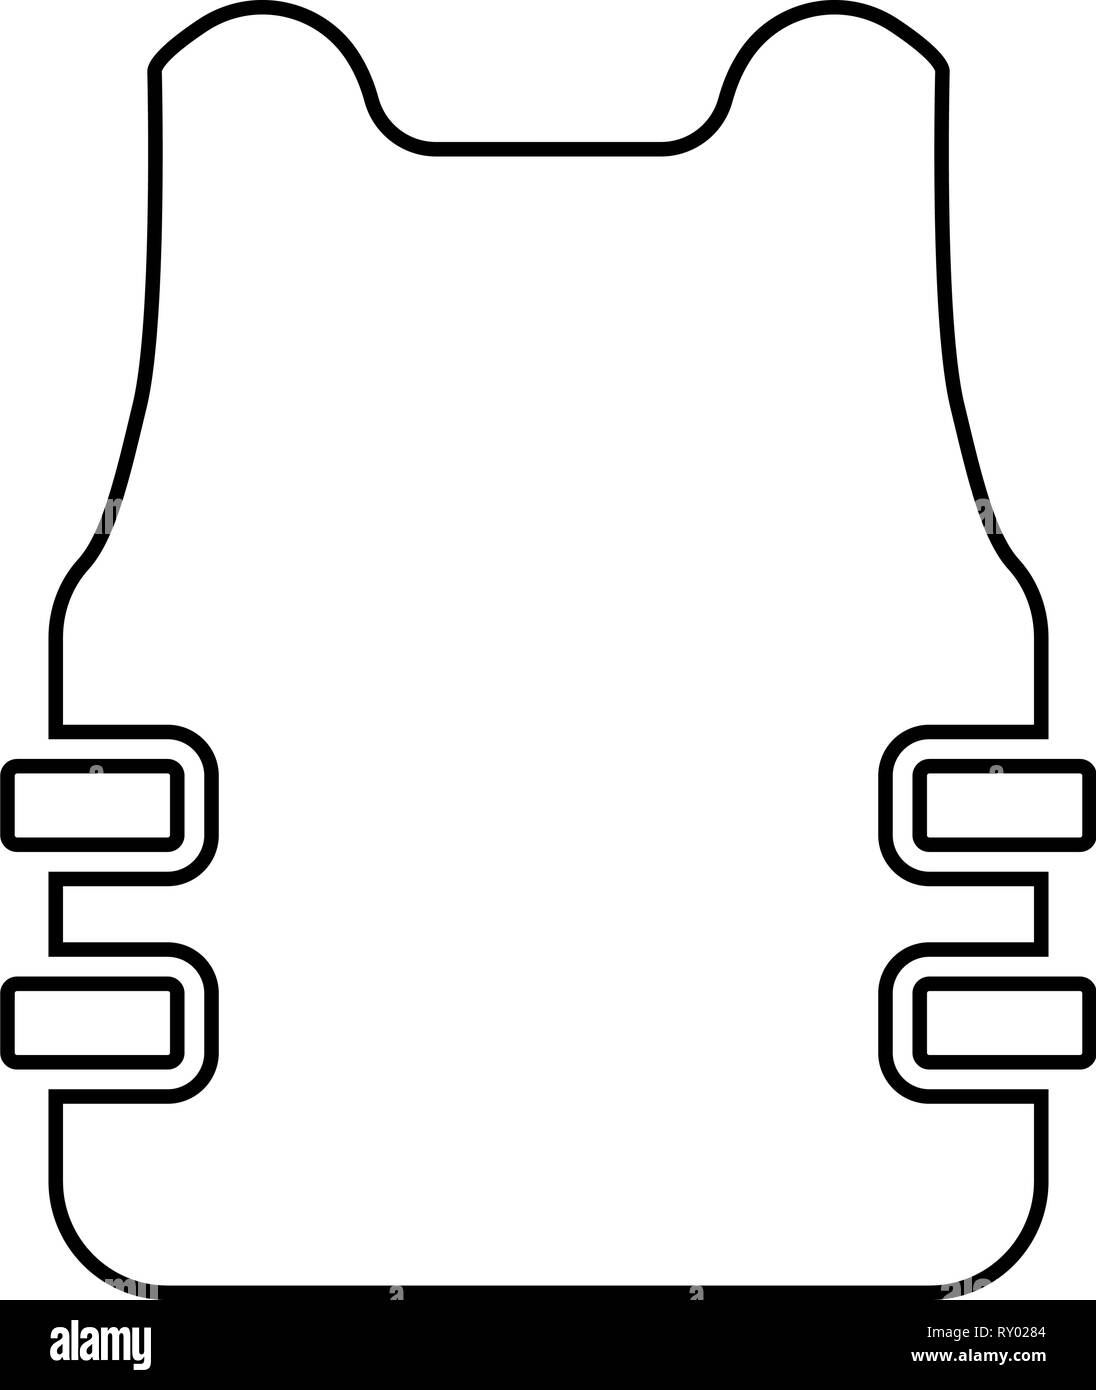 Bullet-proof Flak jacket Symbol schwarz Farbe Umrisse Vektor-illustration Flat Style Bild Stock Vektor